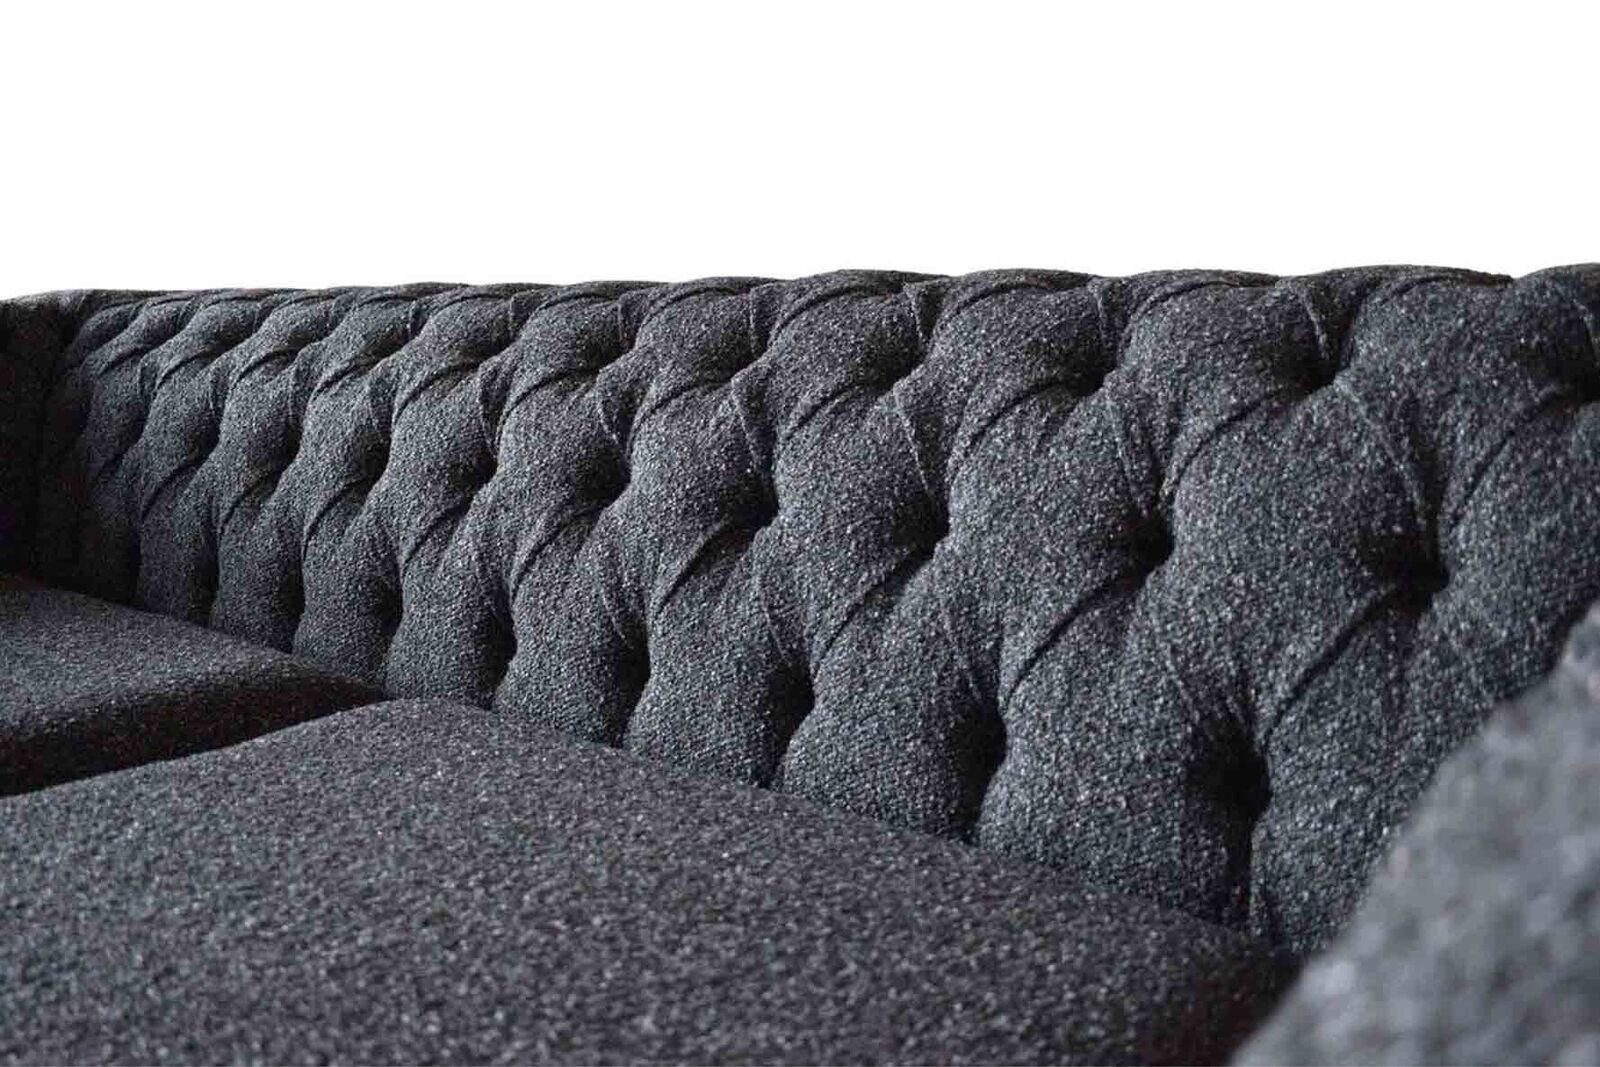 JVmoebel Sofa Graue Polster Design 3 Chesterfield Grau Sitzer Textil In Couchen Sofas, Europe Made